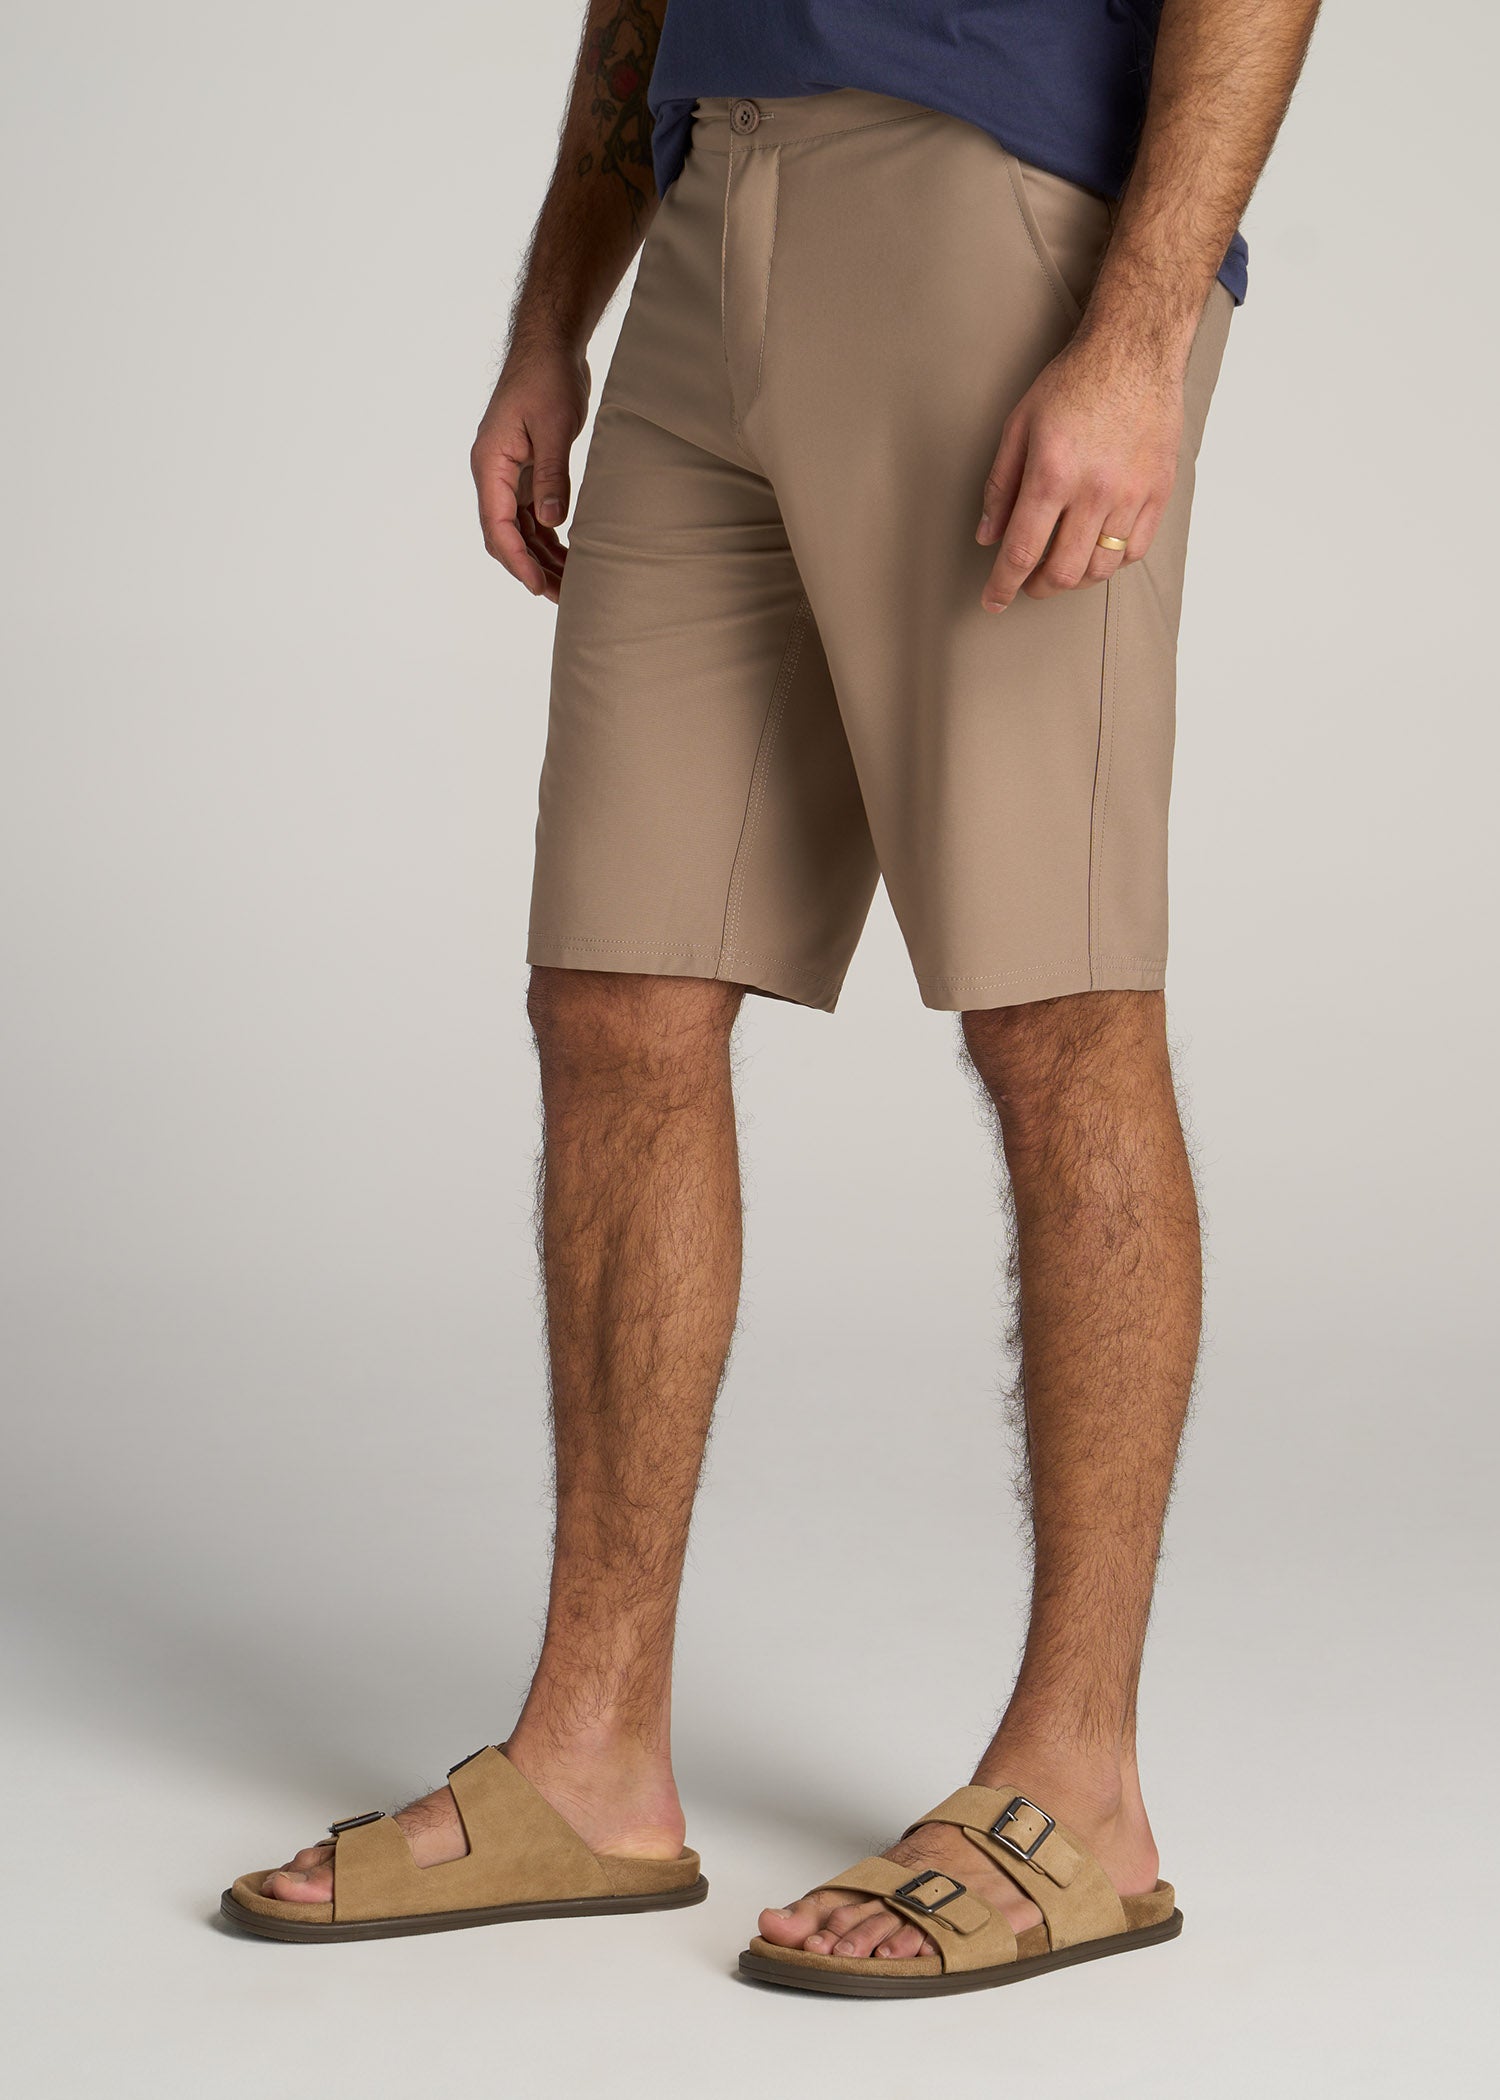 American-Tall-Men-All-Day-Shorts-Dark-Sand-side